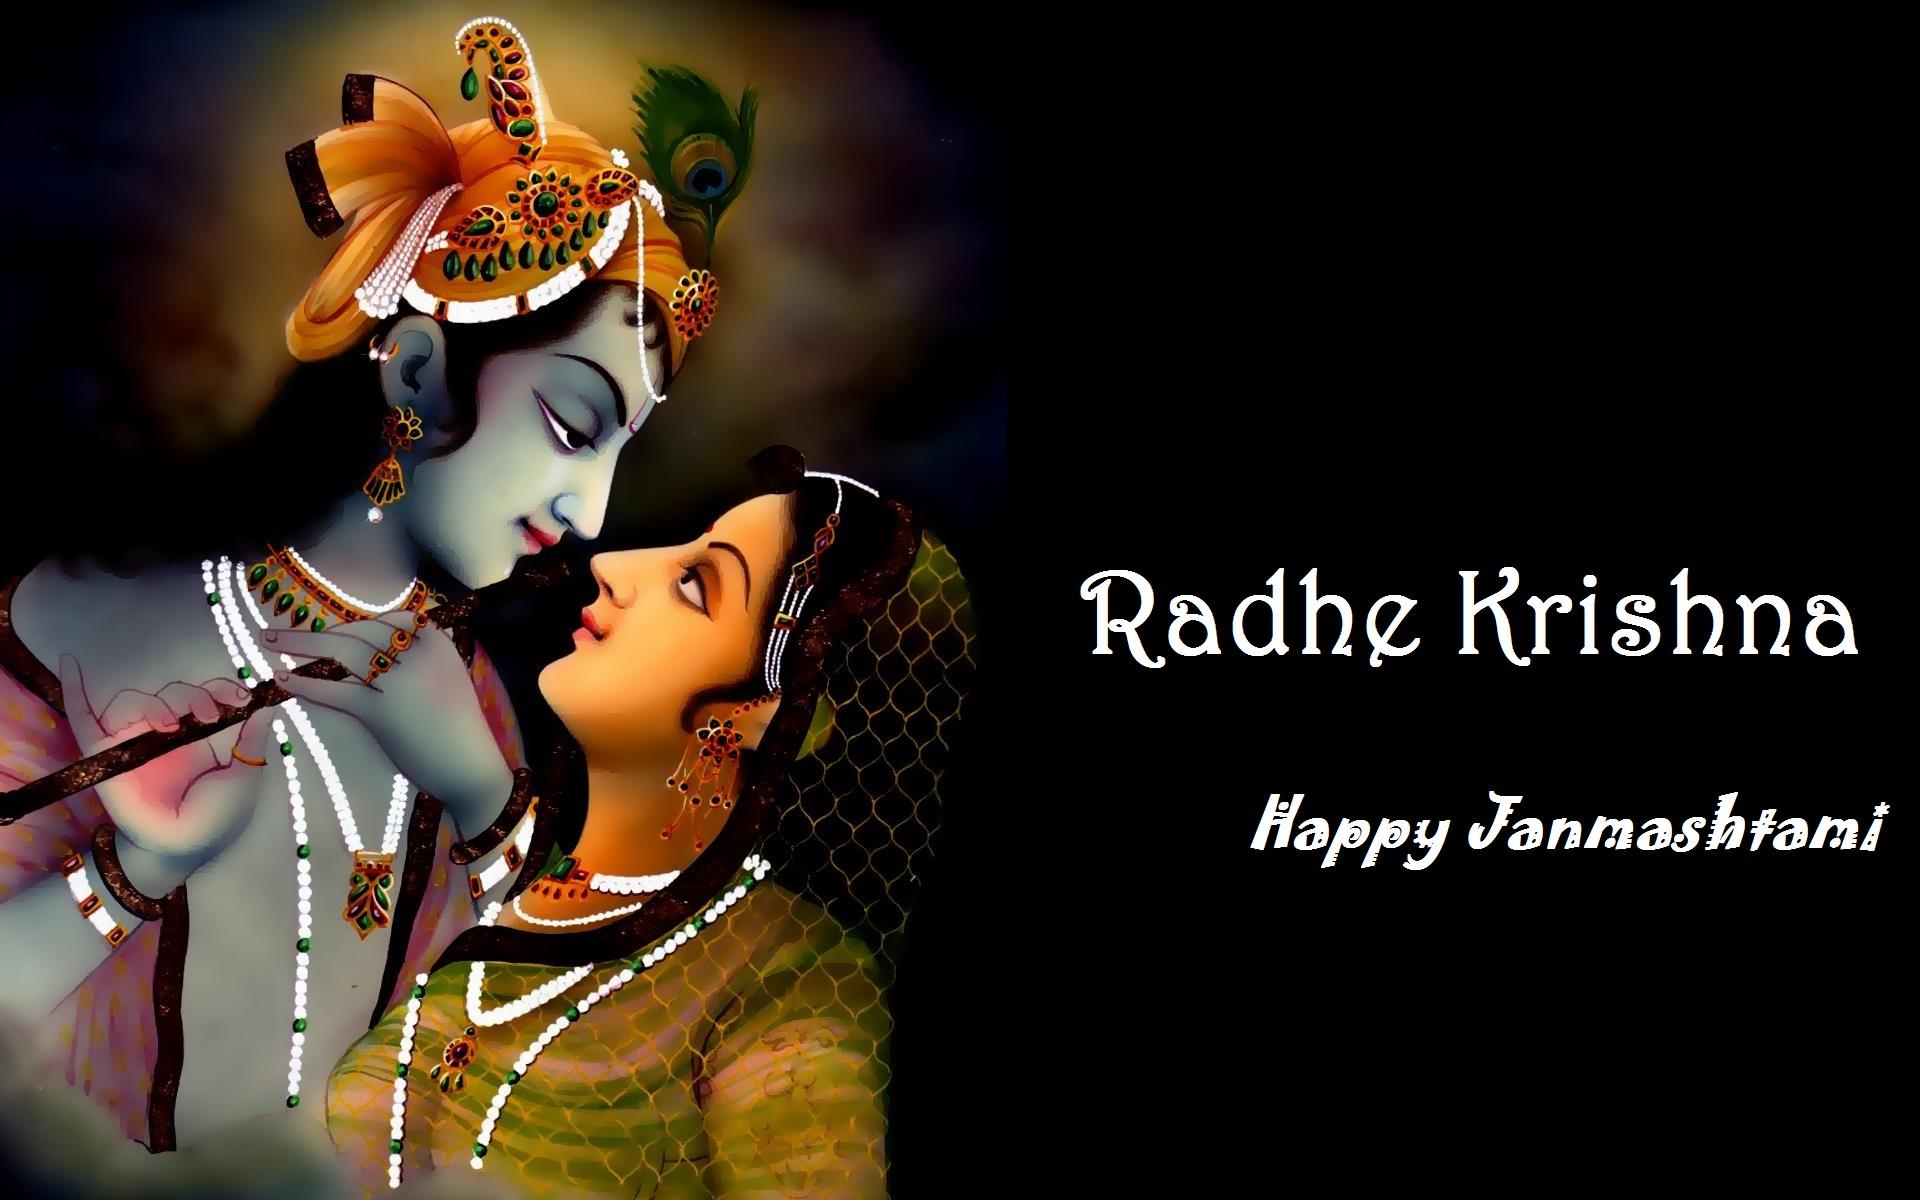 Krishna Janmashtami}* Happy Janmashtami Image, GIF, Wallpapers, HD